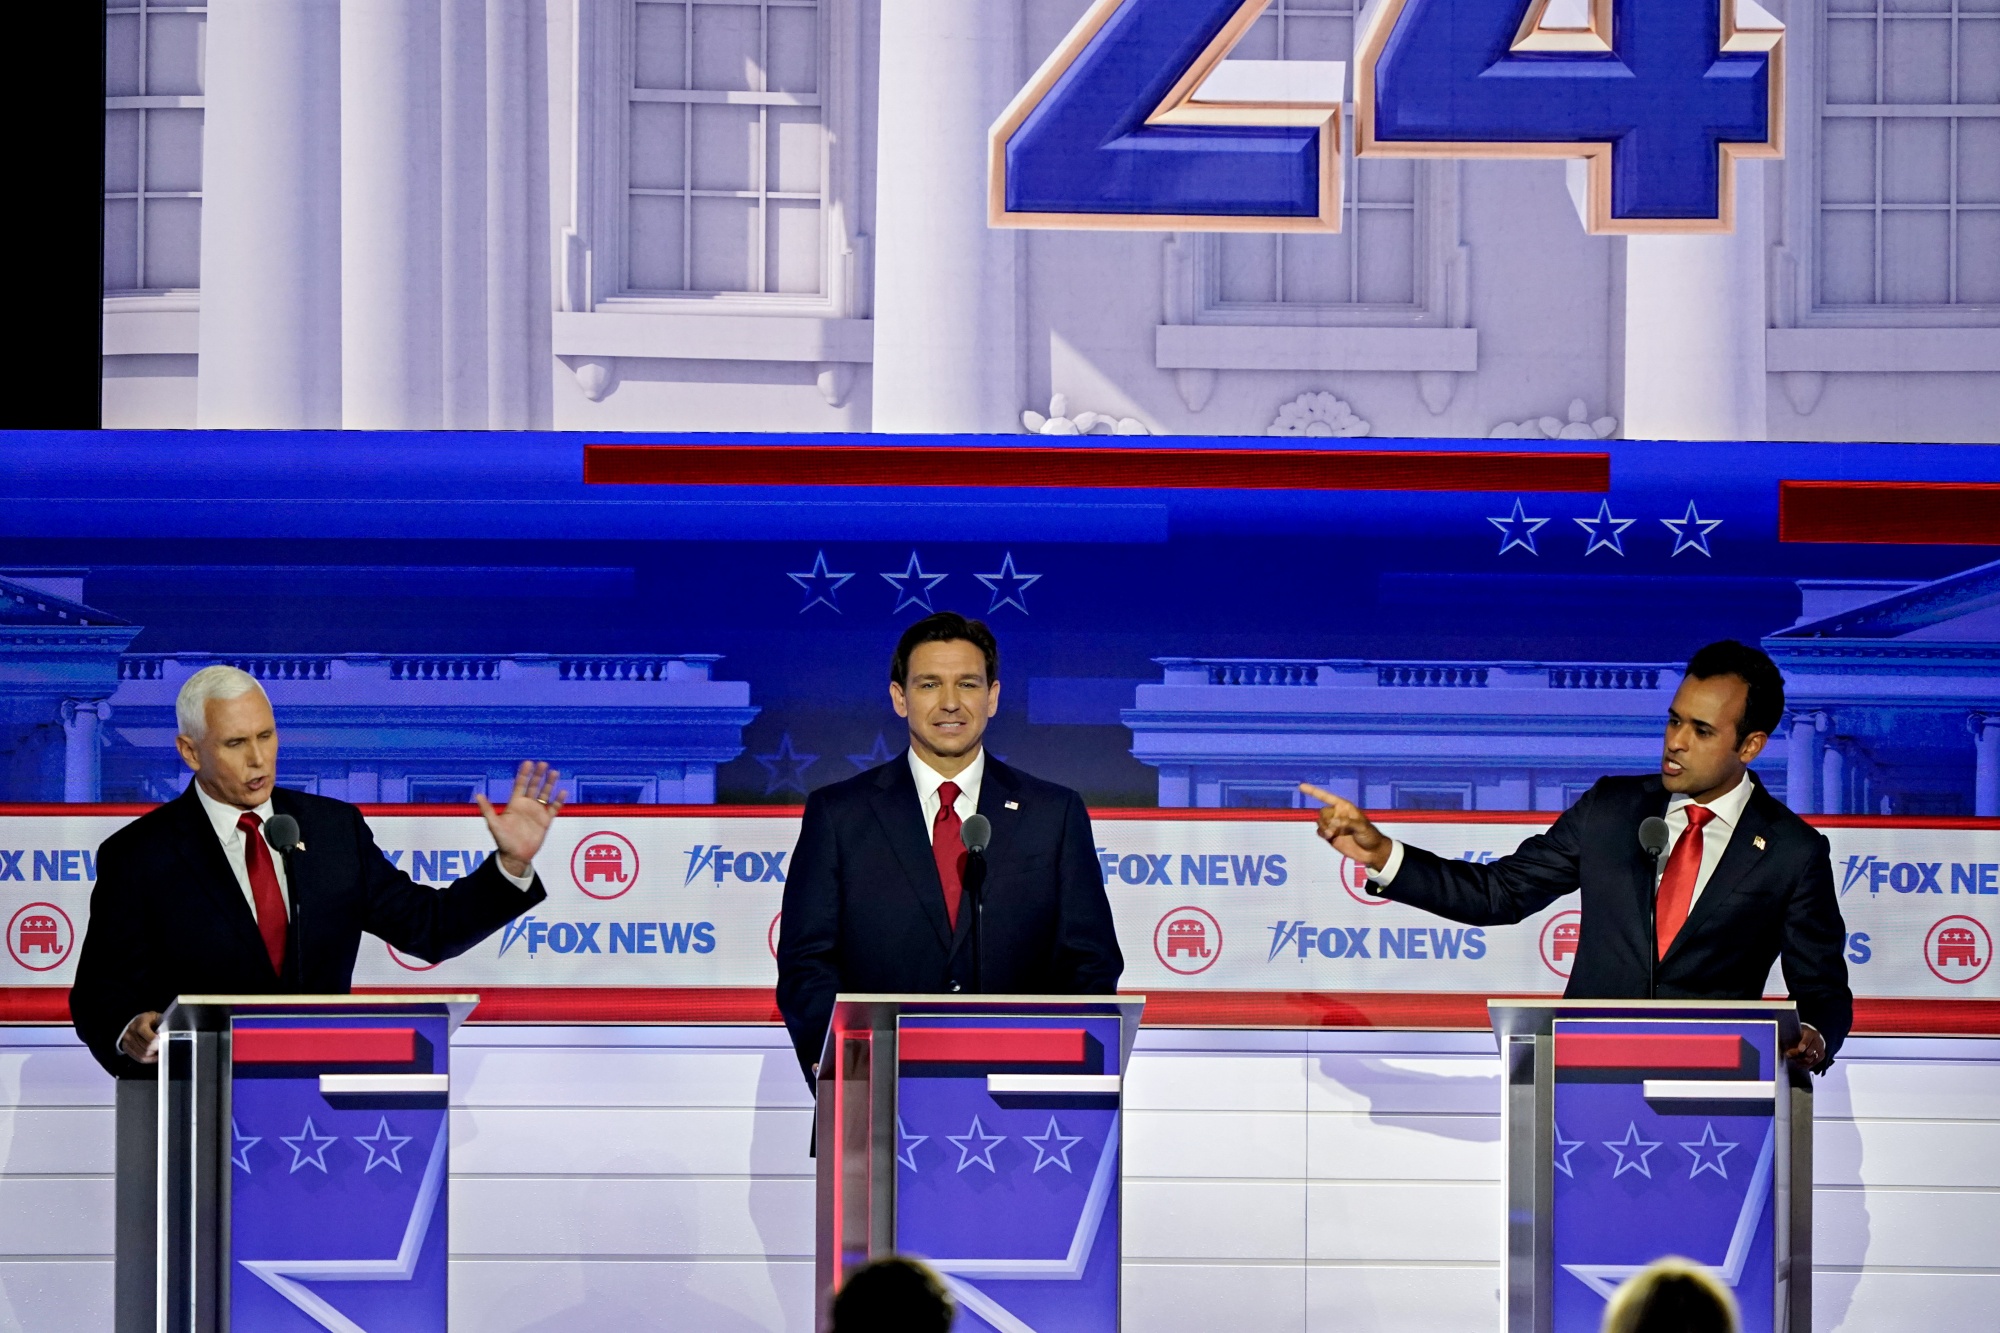 Presidential debate debates clinton paints moments